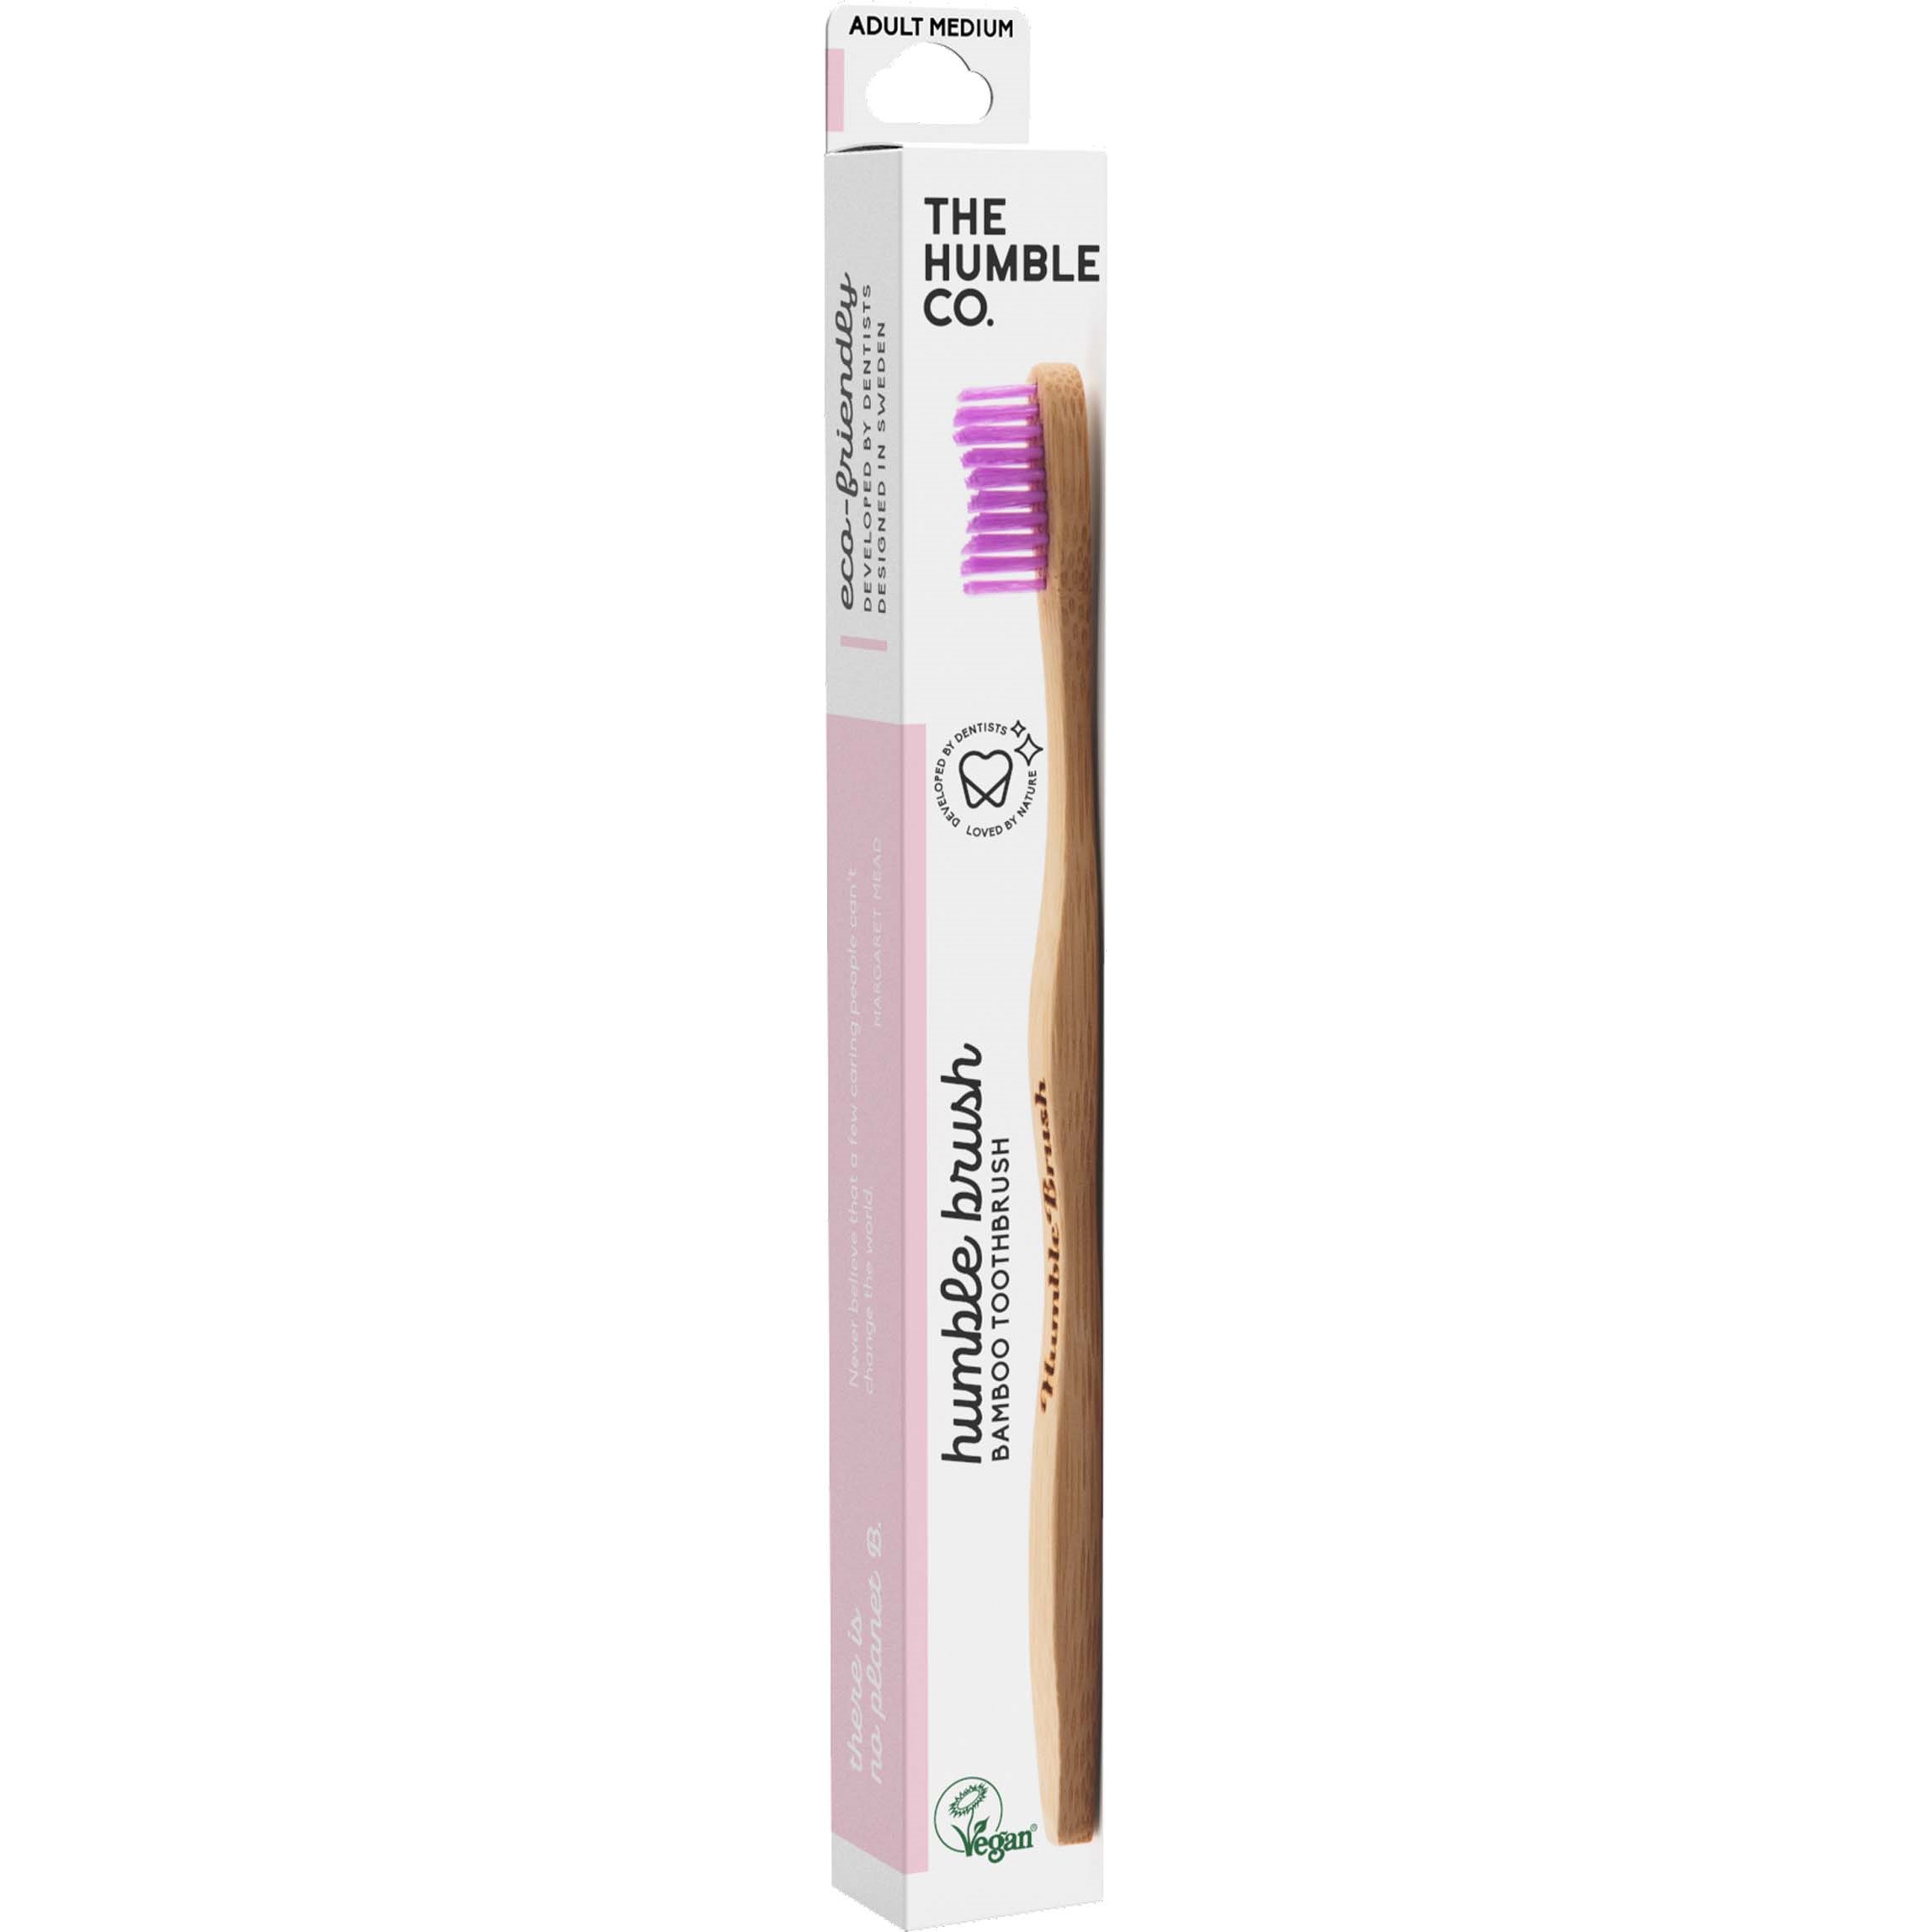 The Humble Co. Bamboo Toothbrush Adult Medium Purple